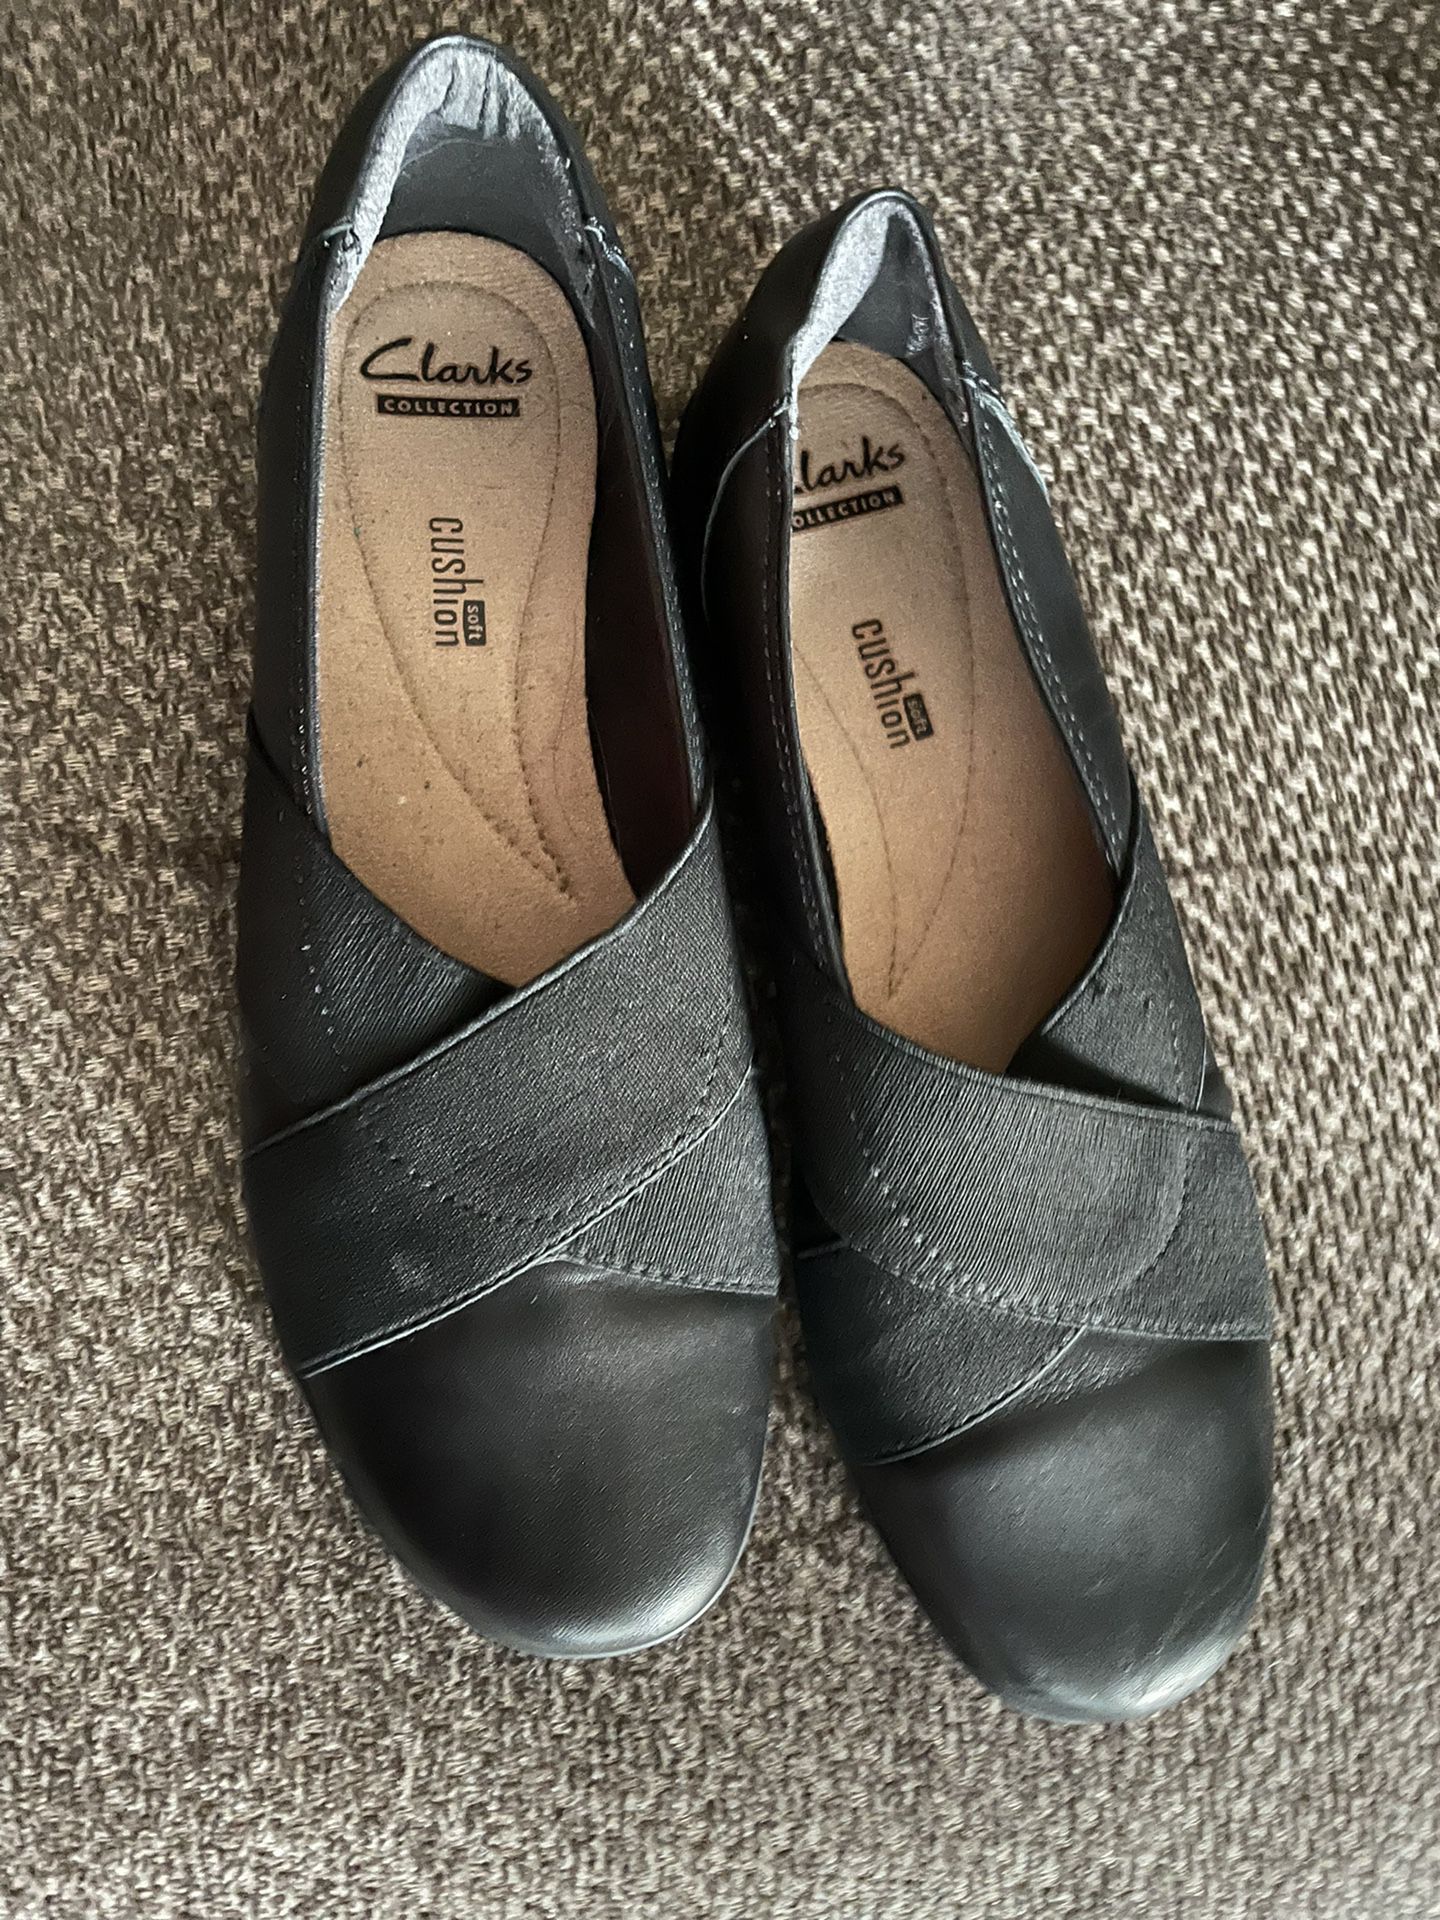 Ladies Clark Soft Cushion Shoes Size 8